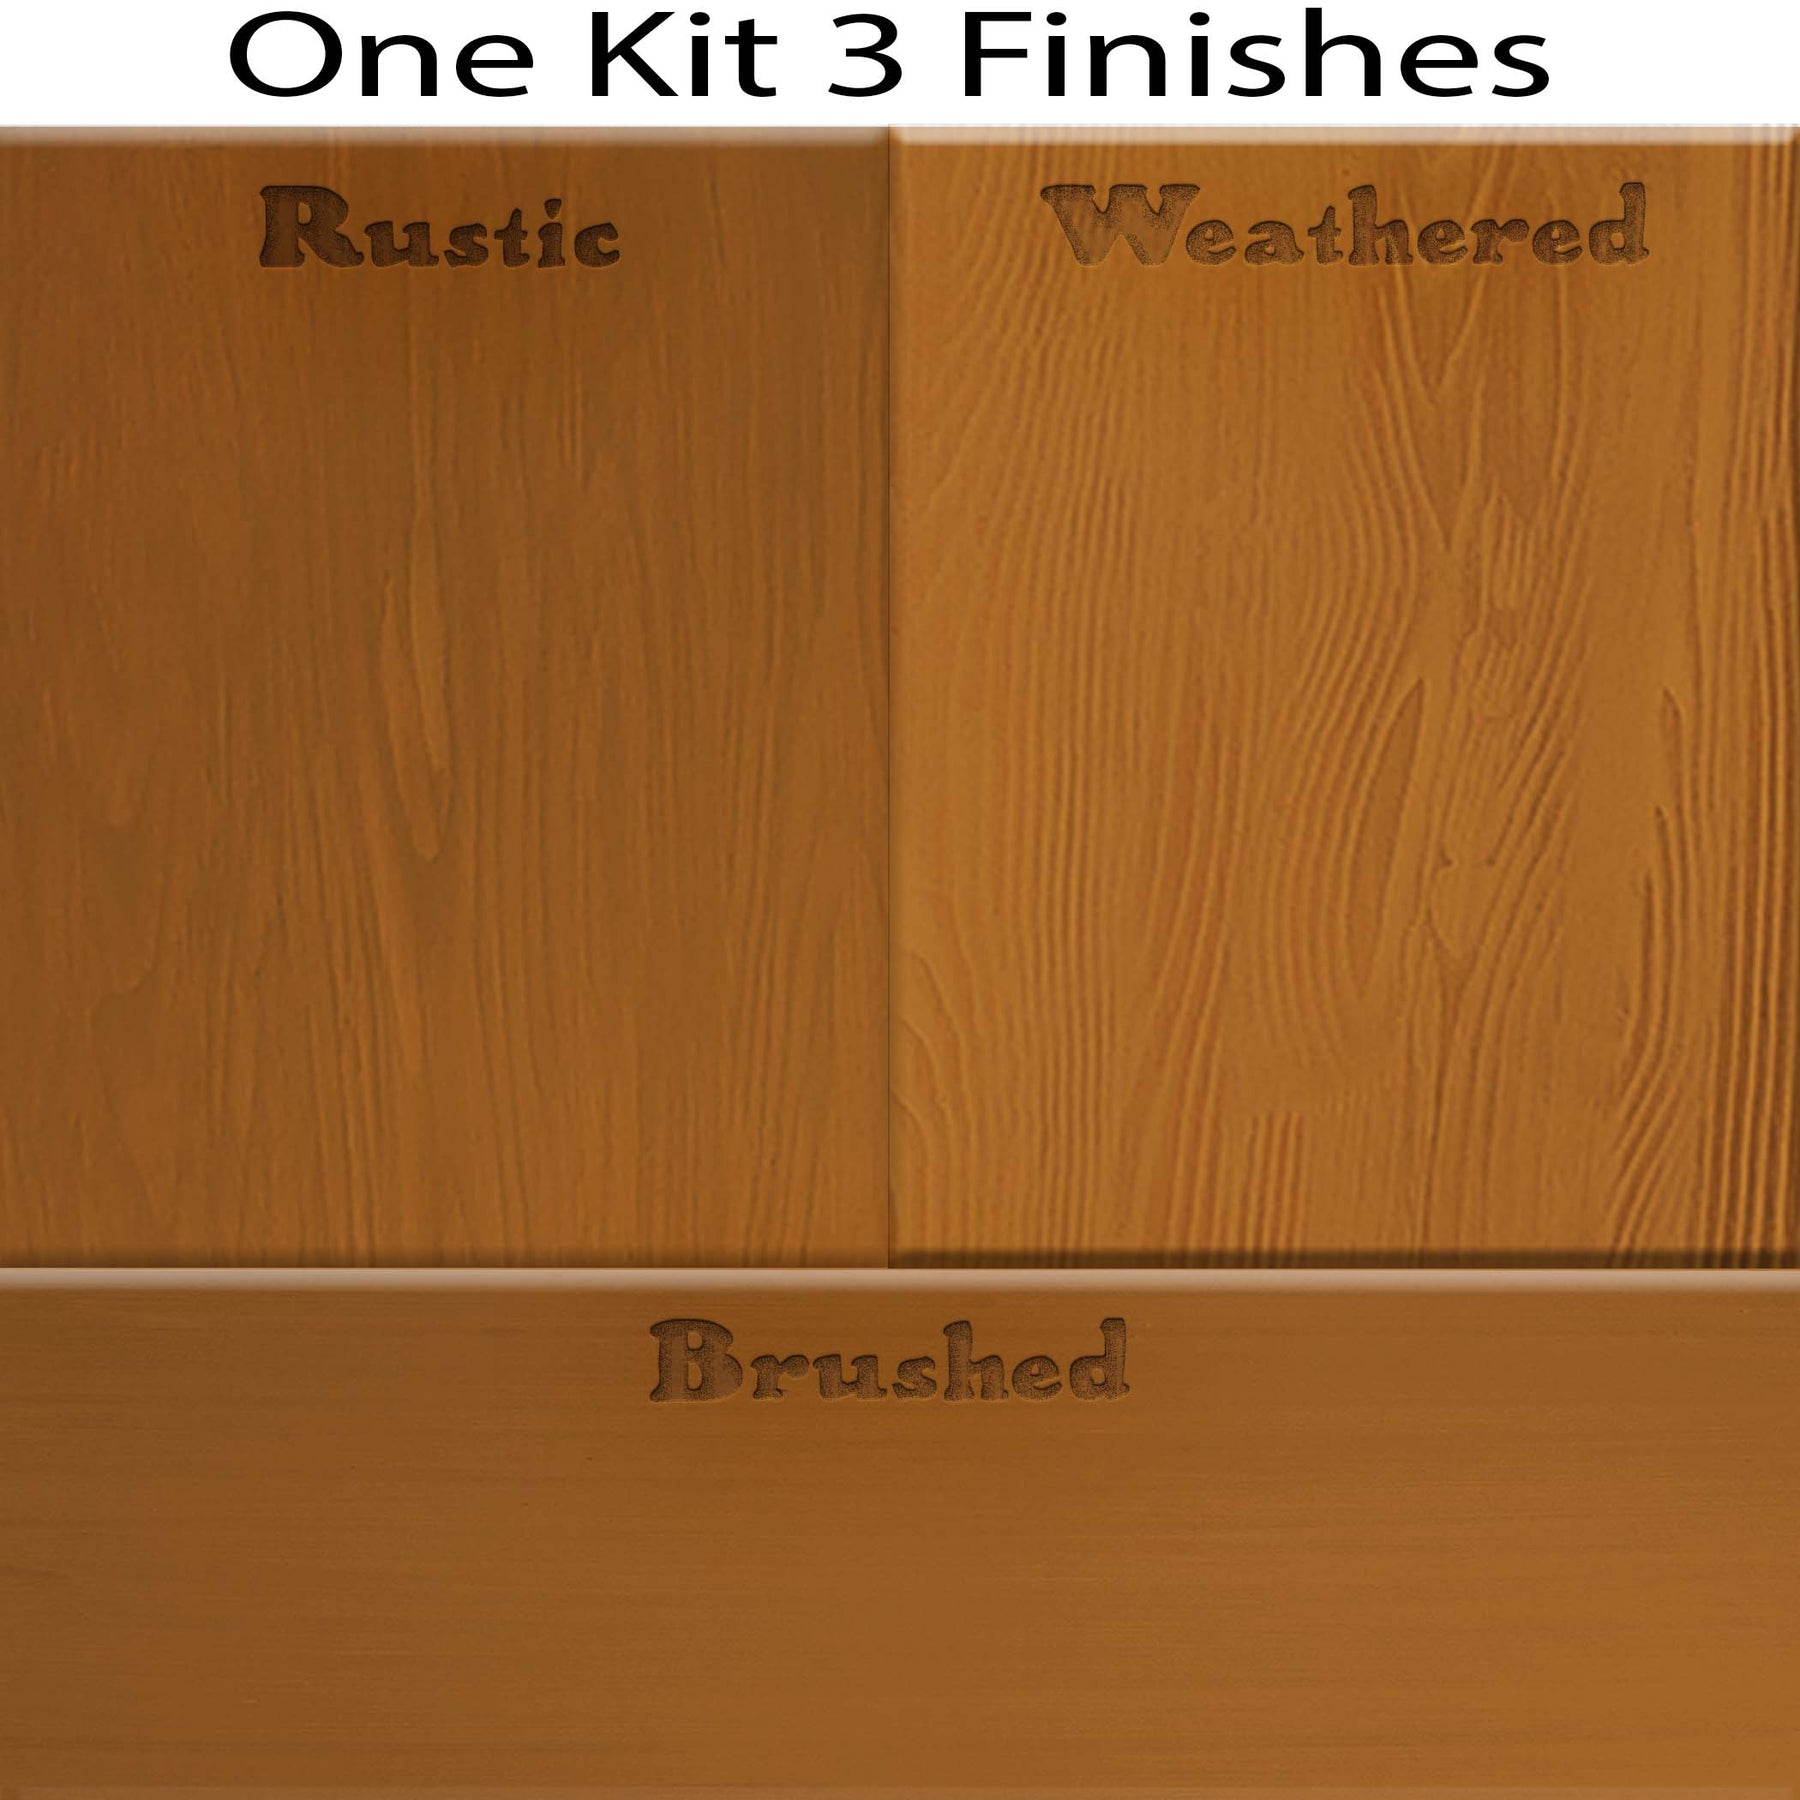 Wood'n Cabinet Kit (24 Door / Grained) - Cedar